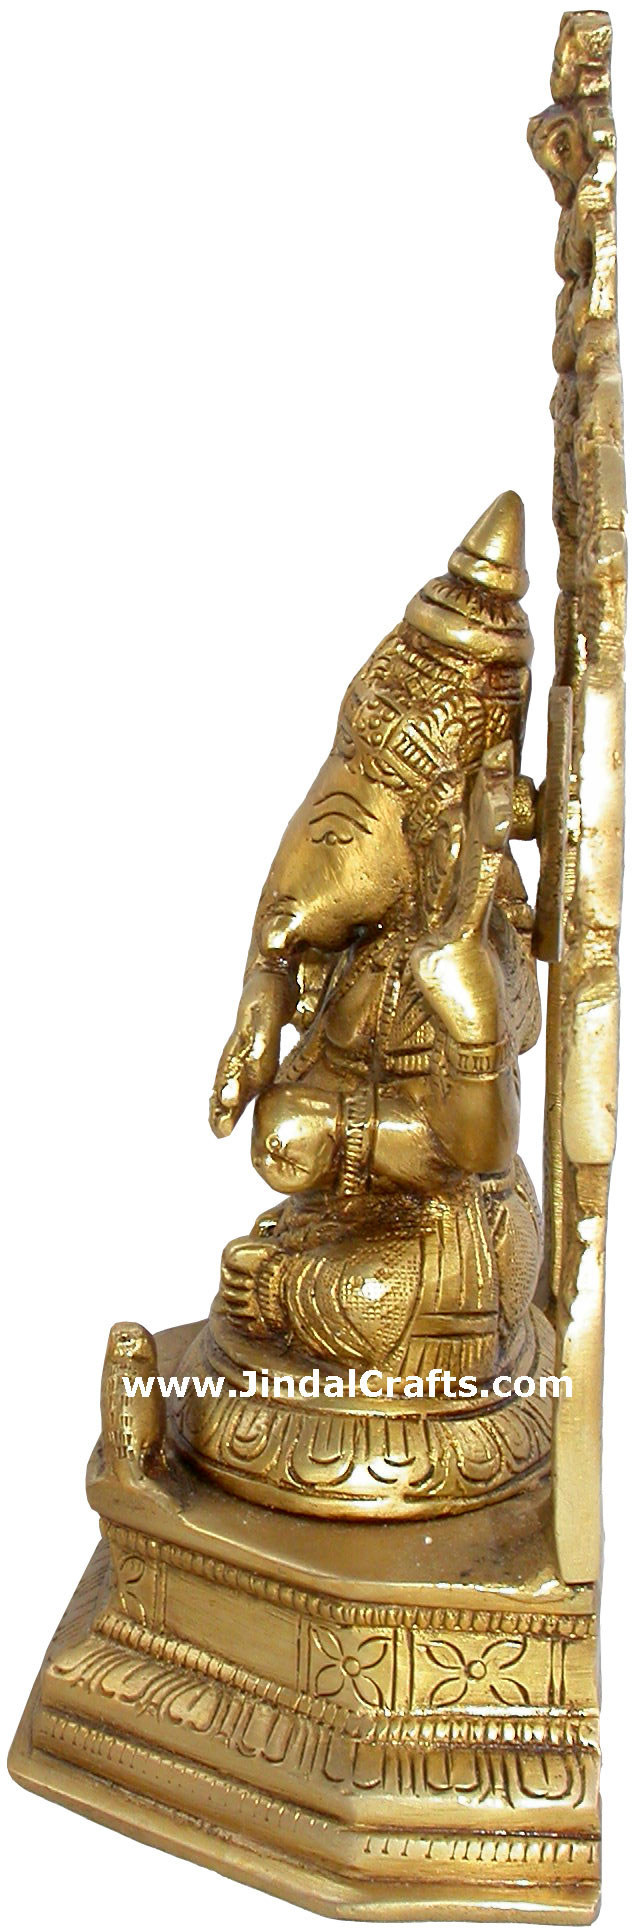 Lord Ganesh Statue Hindu Religious Artifact Statues Art